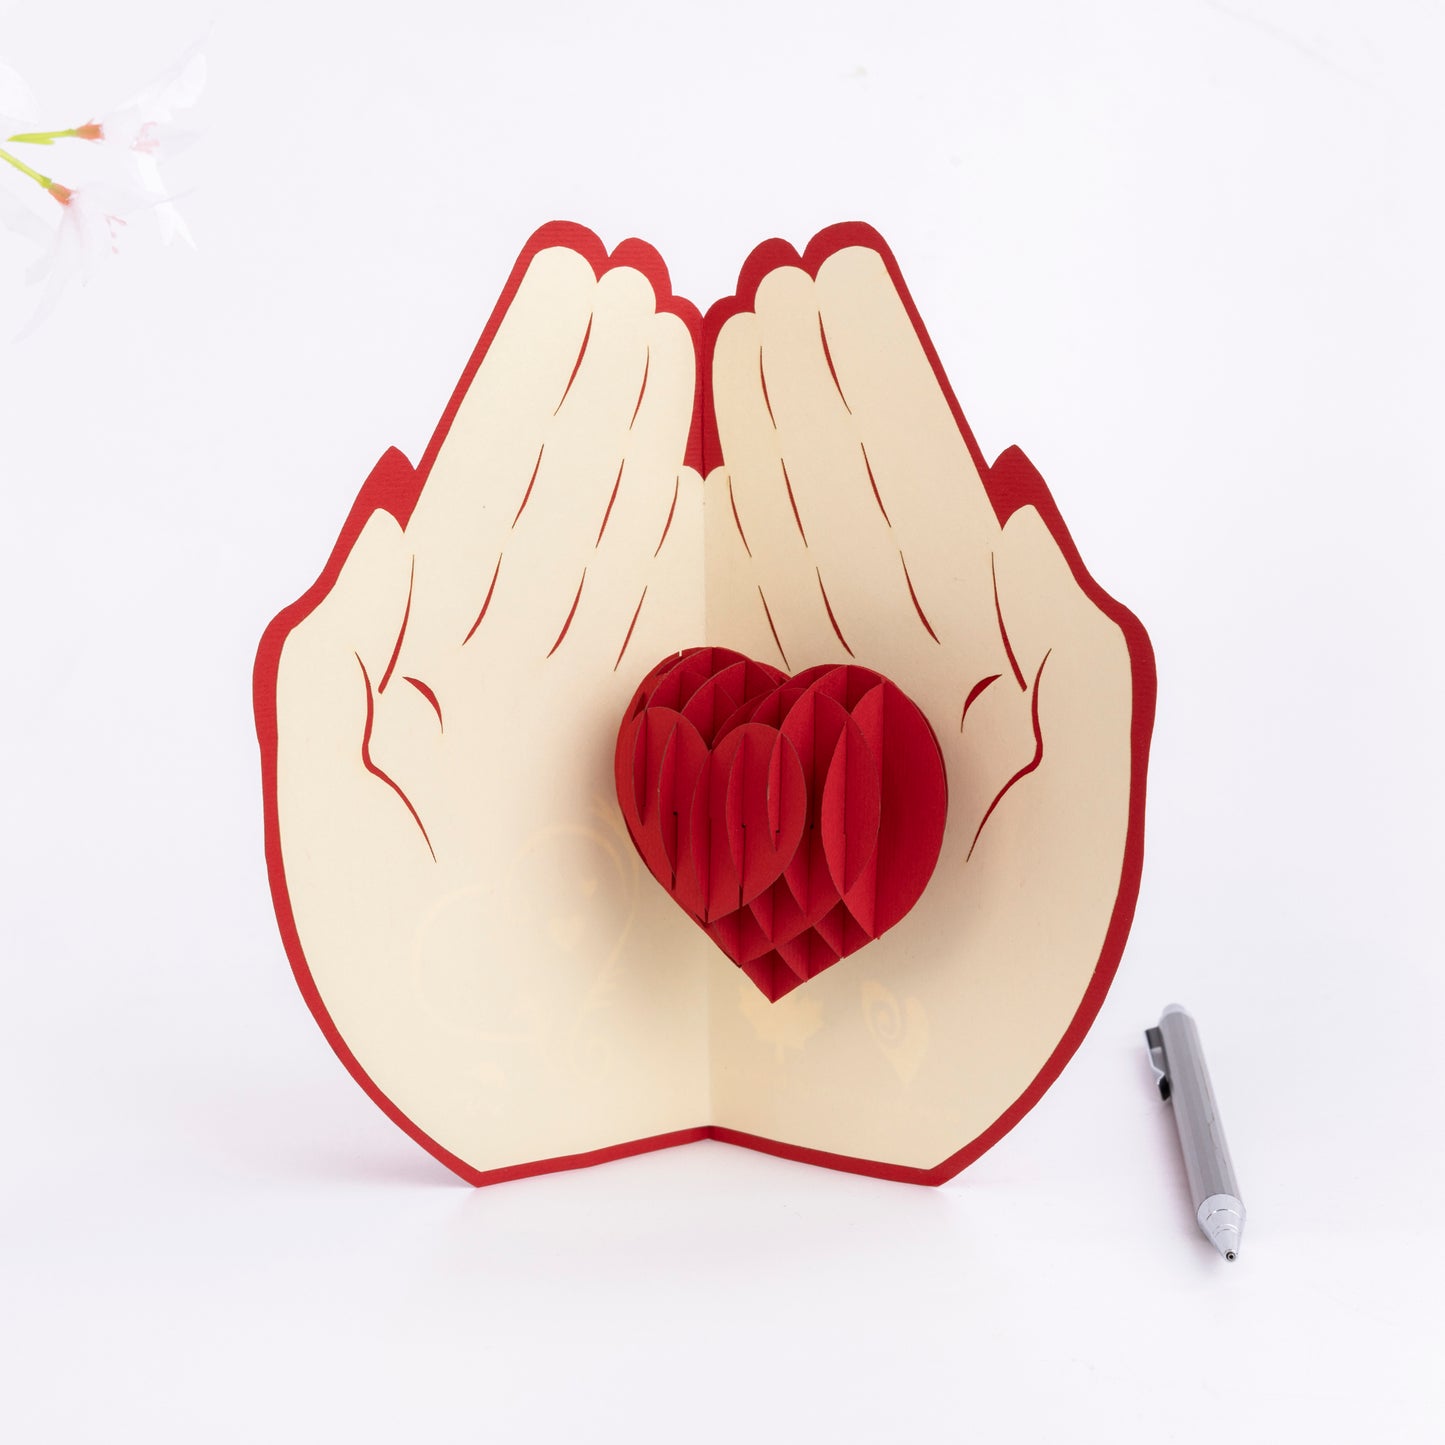 Heart in the Hands